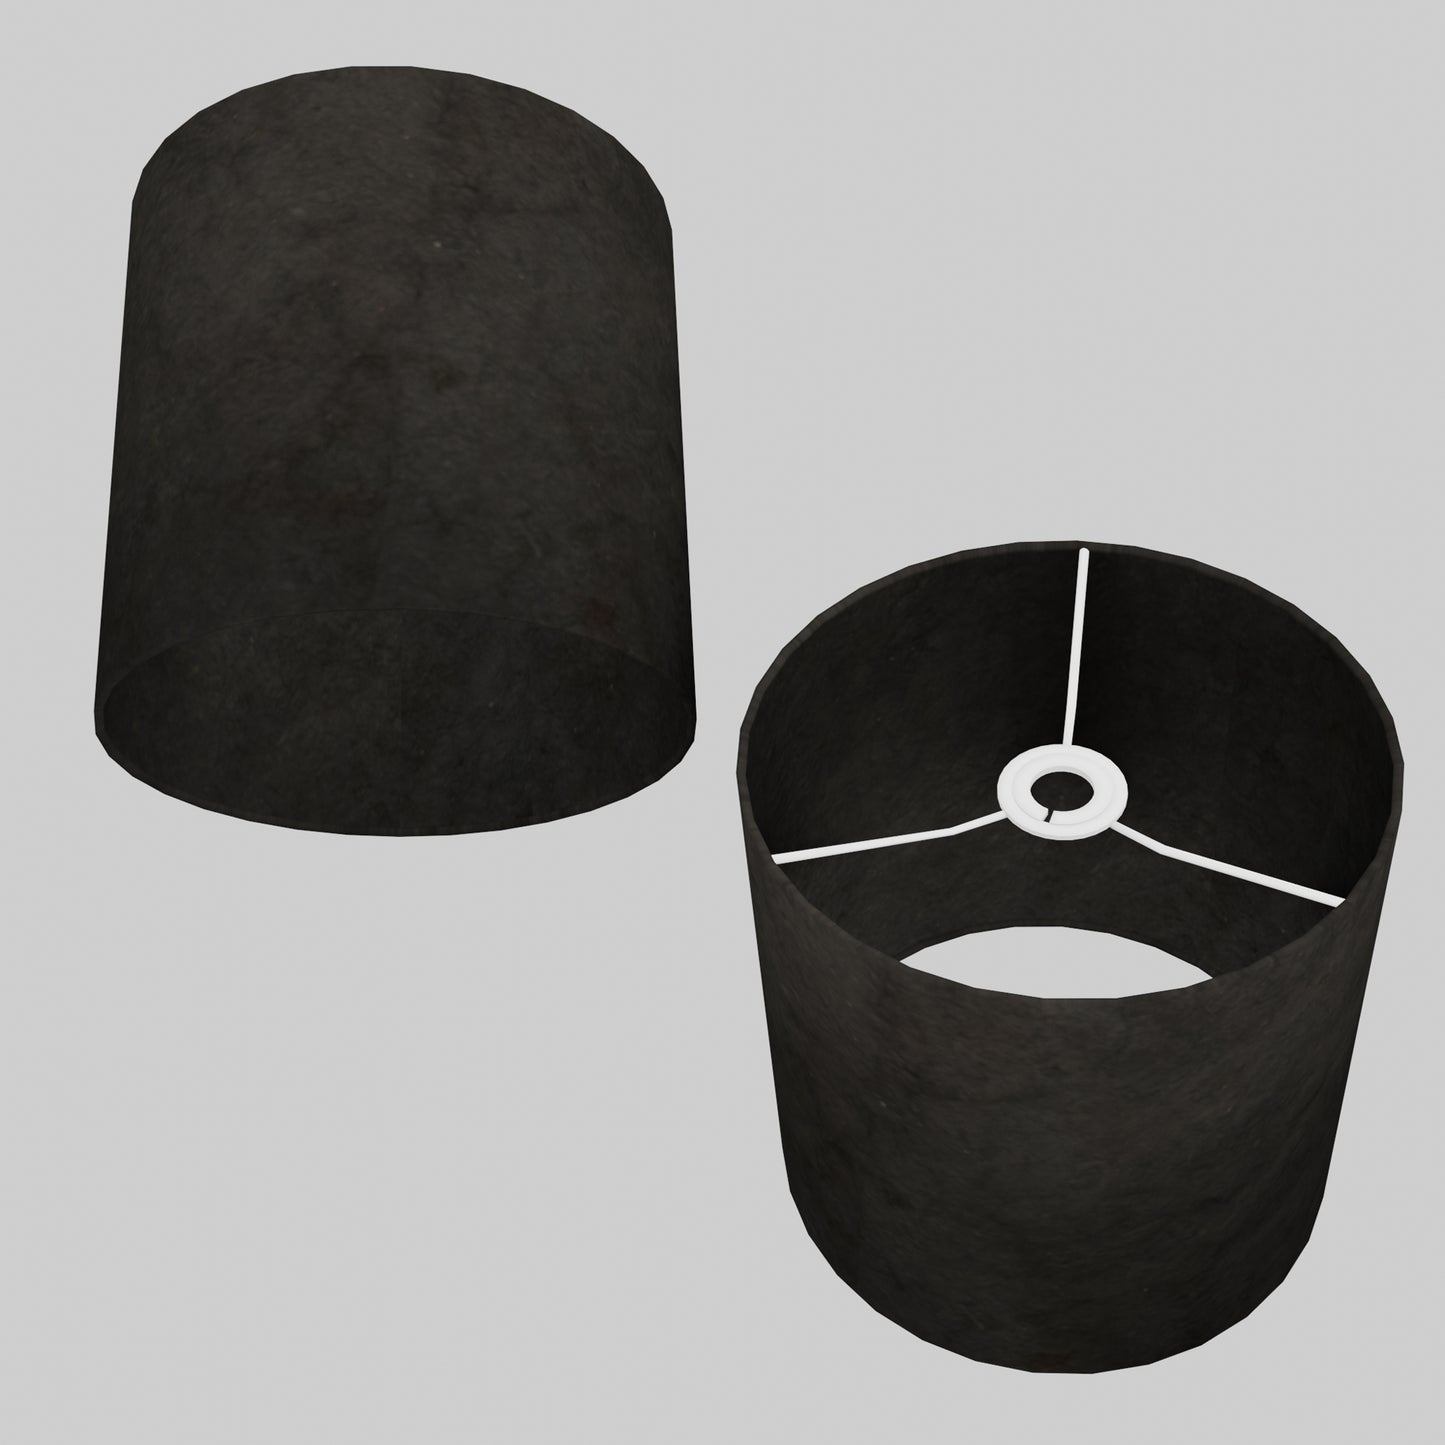 Drum Lamp Shade - P55 - Black Lokta, 25cm x 25cm